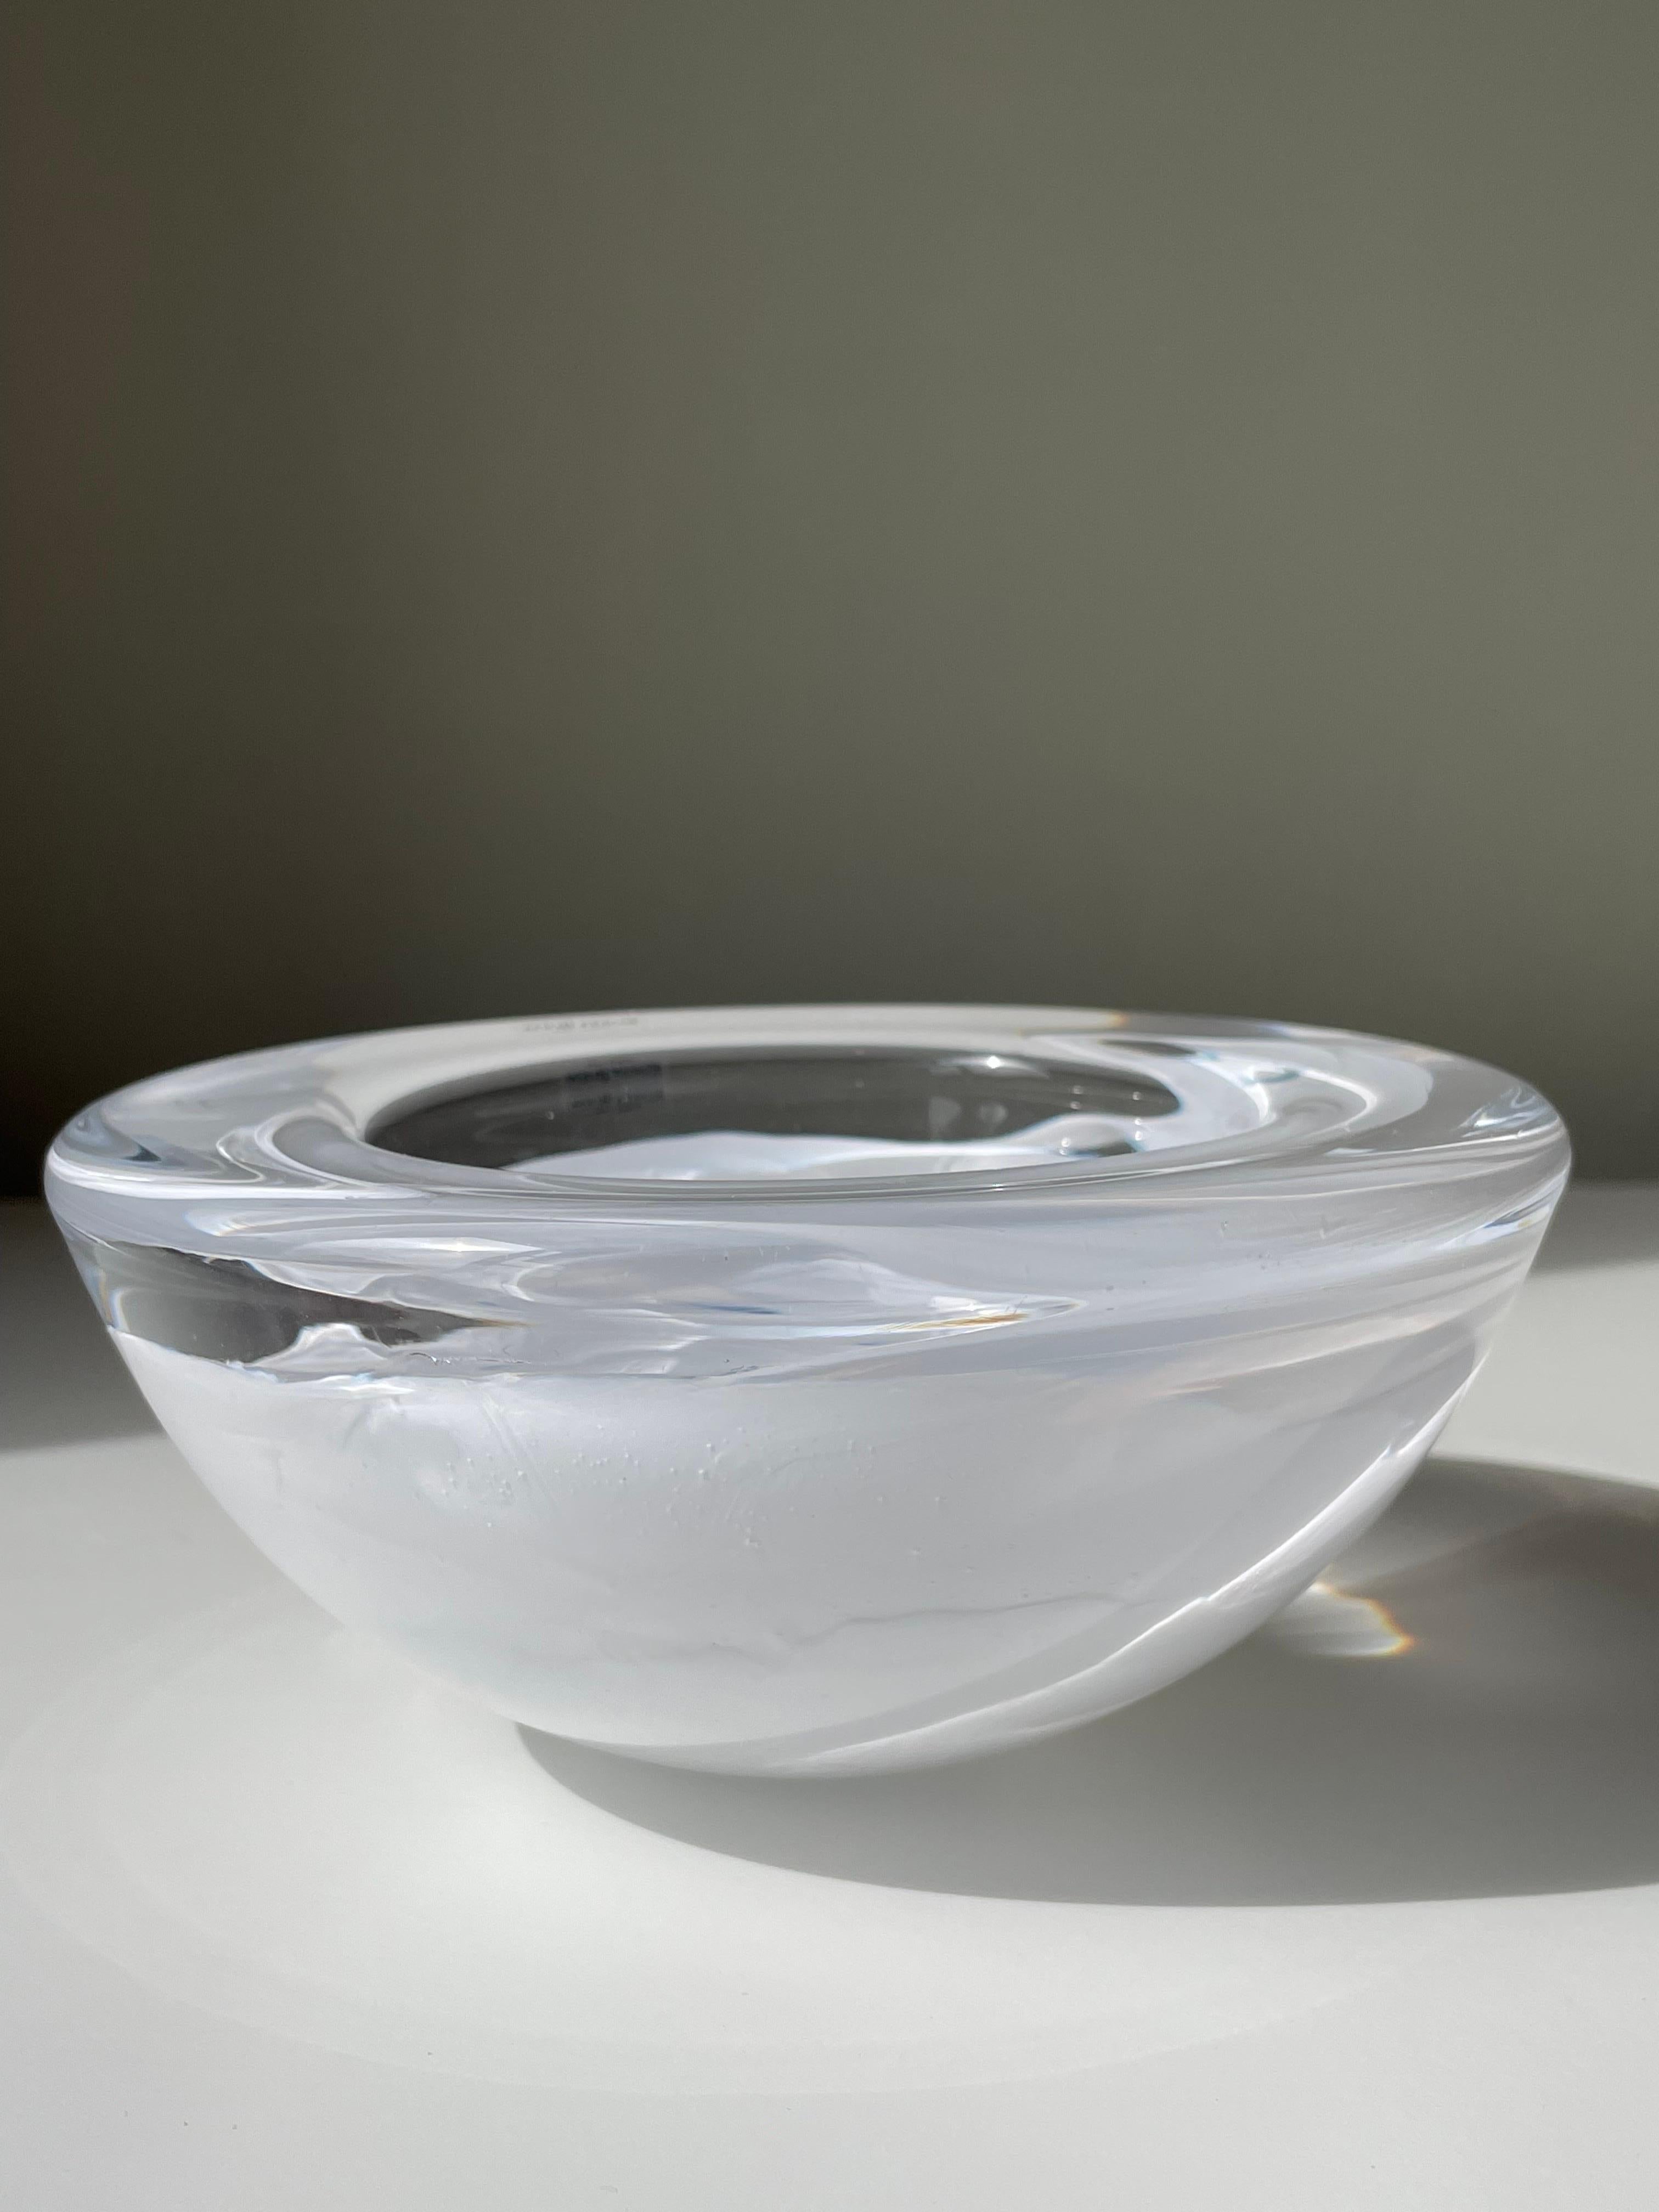 Kosta Boda Swedish Art Glass White Swirl Bowl, 1980s For Sale 8